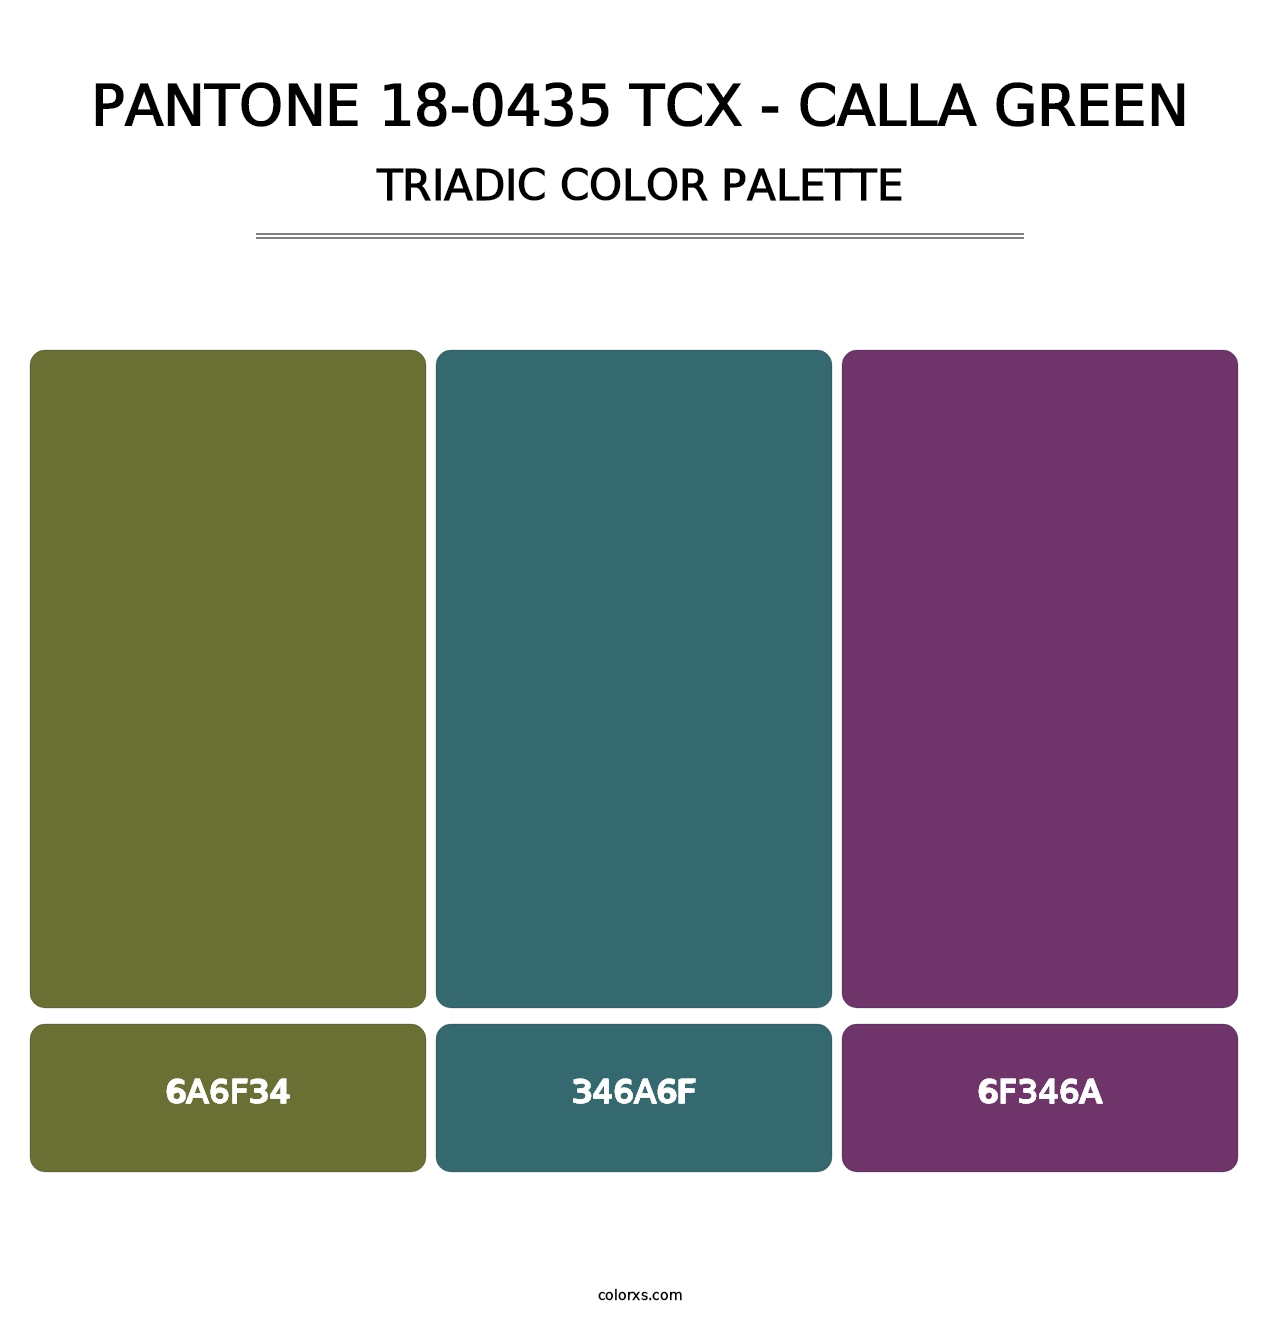 PANTONE 18-0435 TCX - Calla Green - Triadic Color Palette